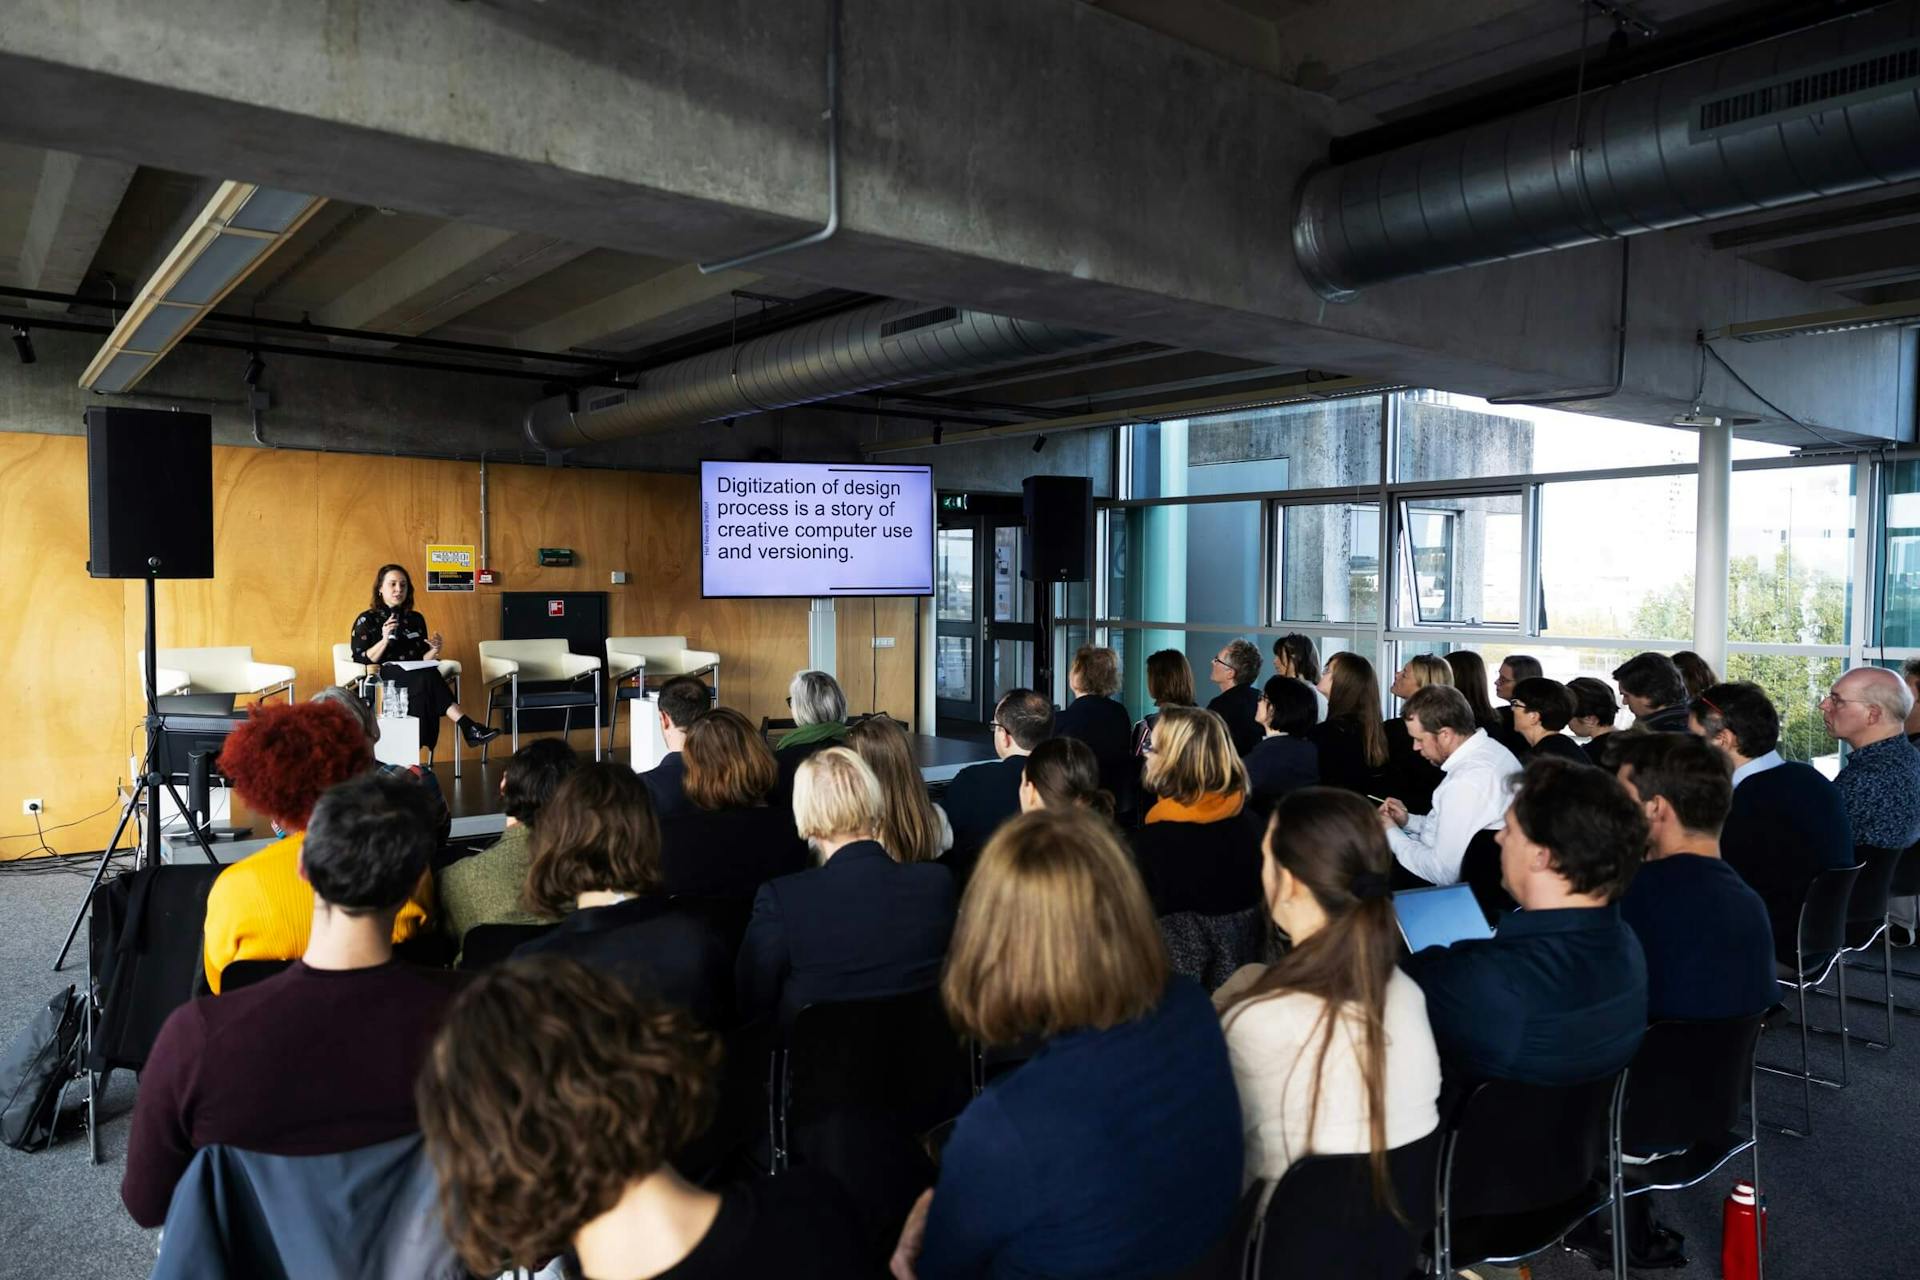 Ania Molenda presenting at the Keeping the Digital session. Photo Florine van Rees.  